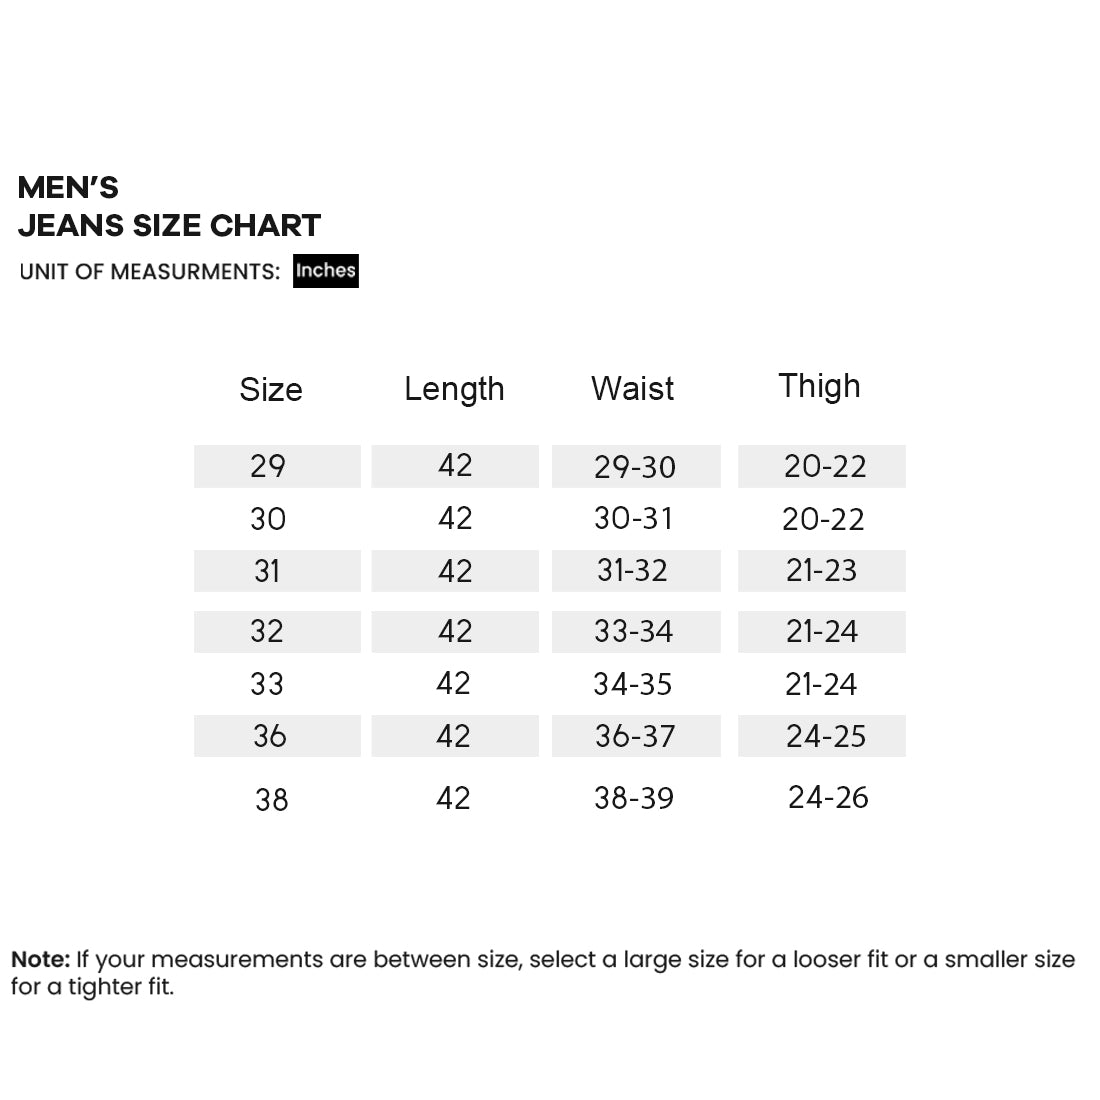 Men's Regular Fit Stretchable Denim Jeans Black 98 – The Cut Price